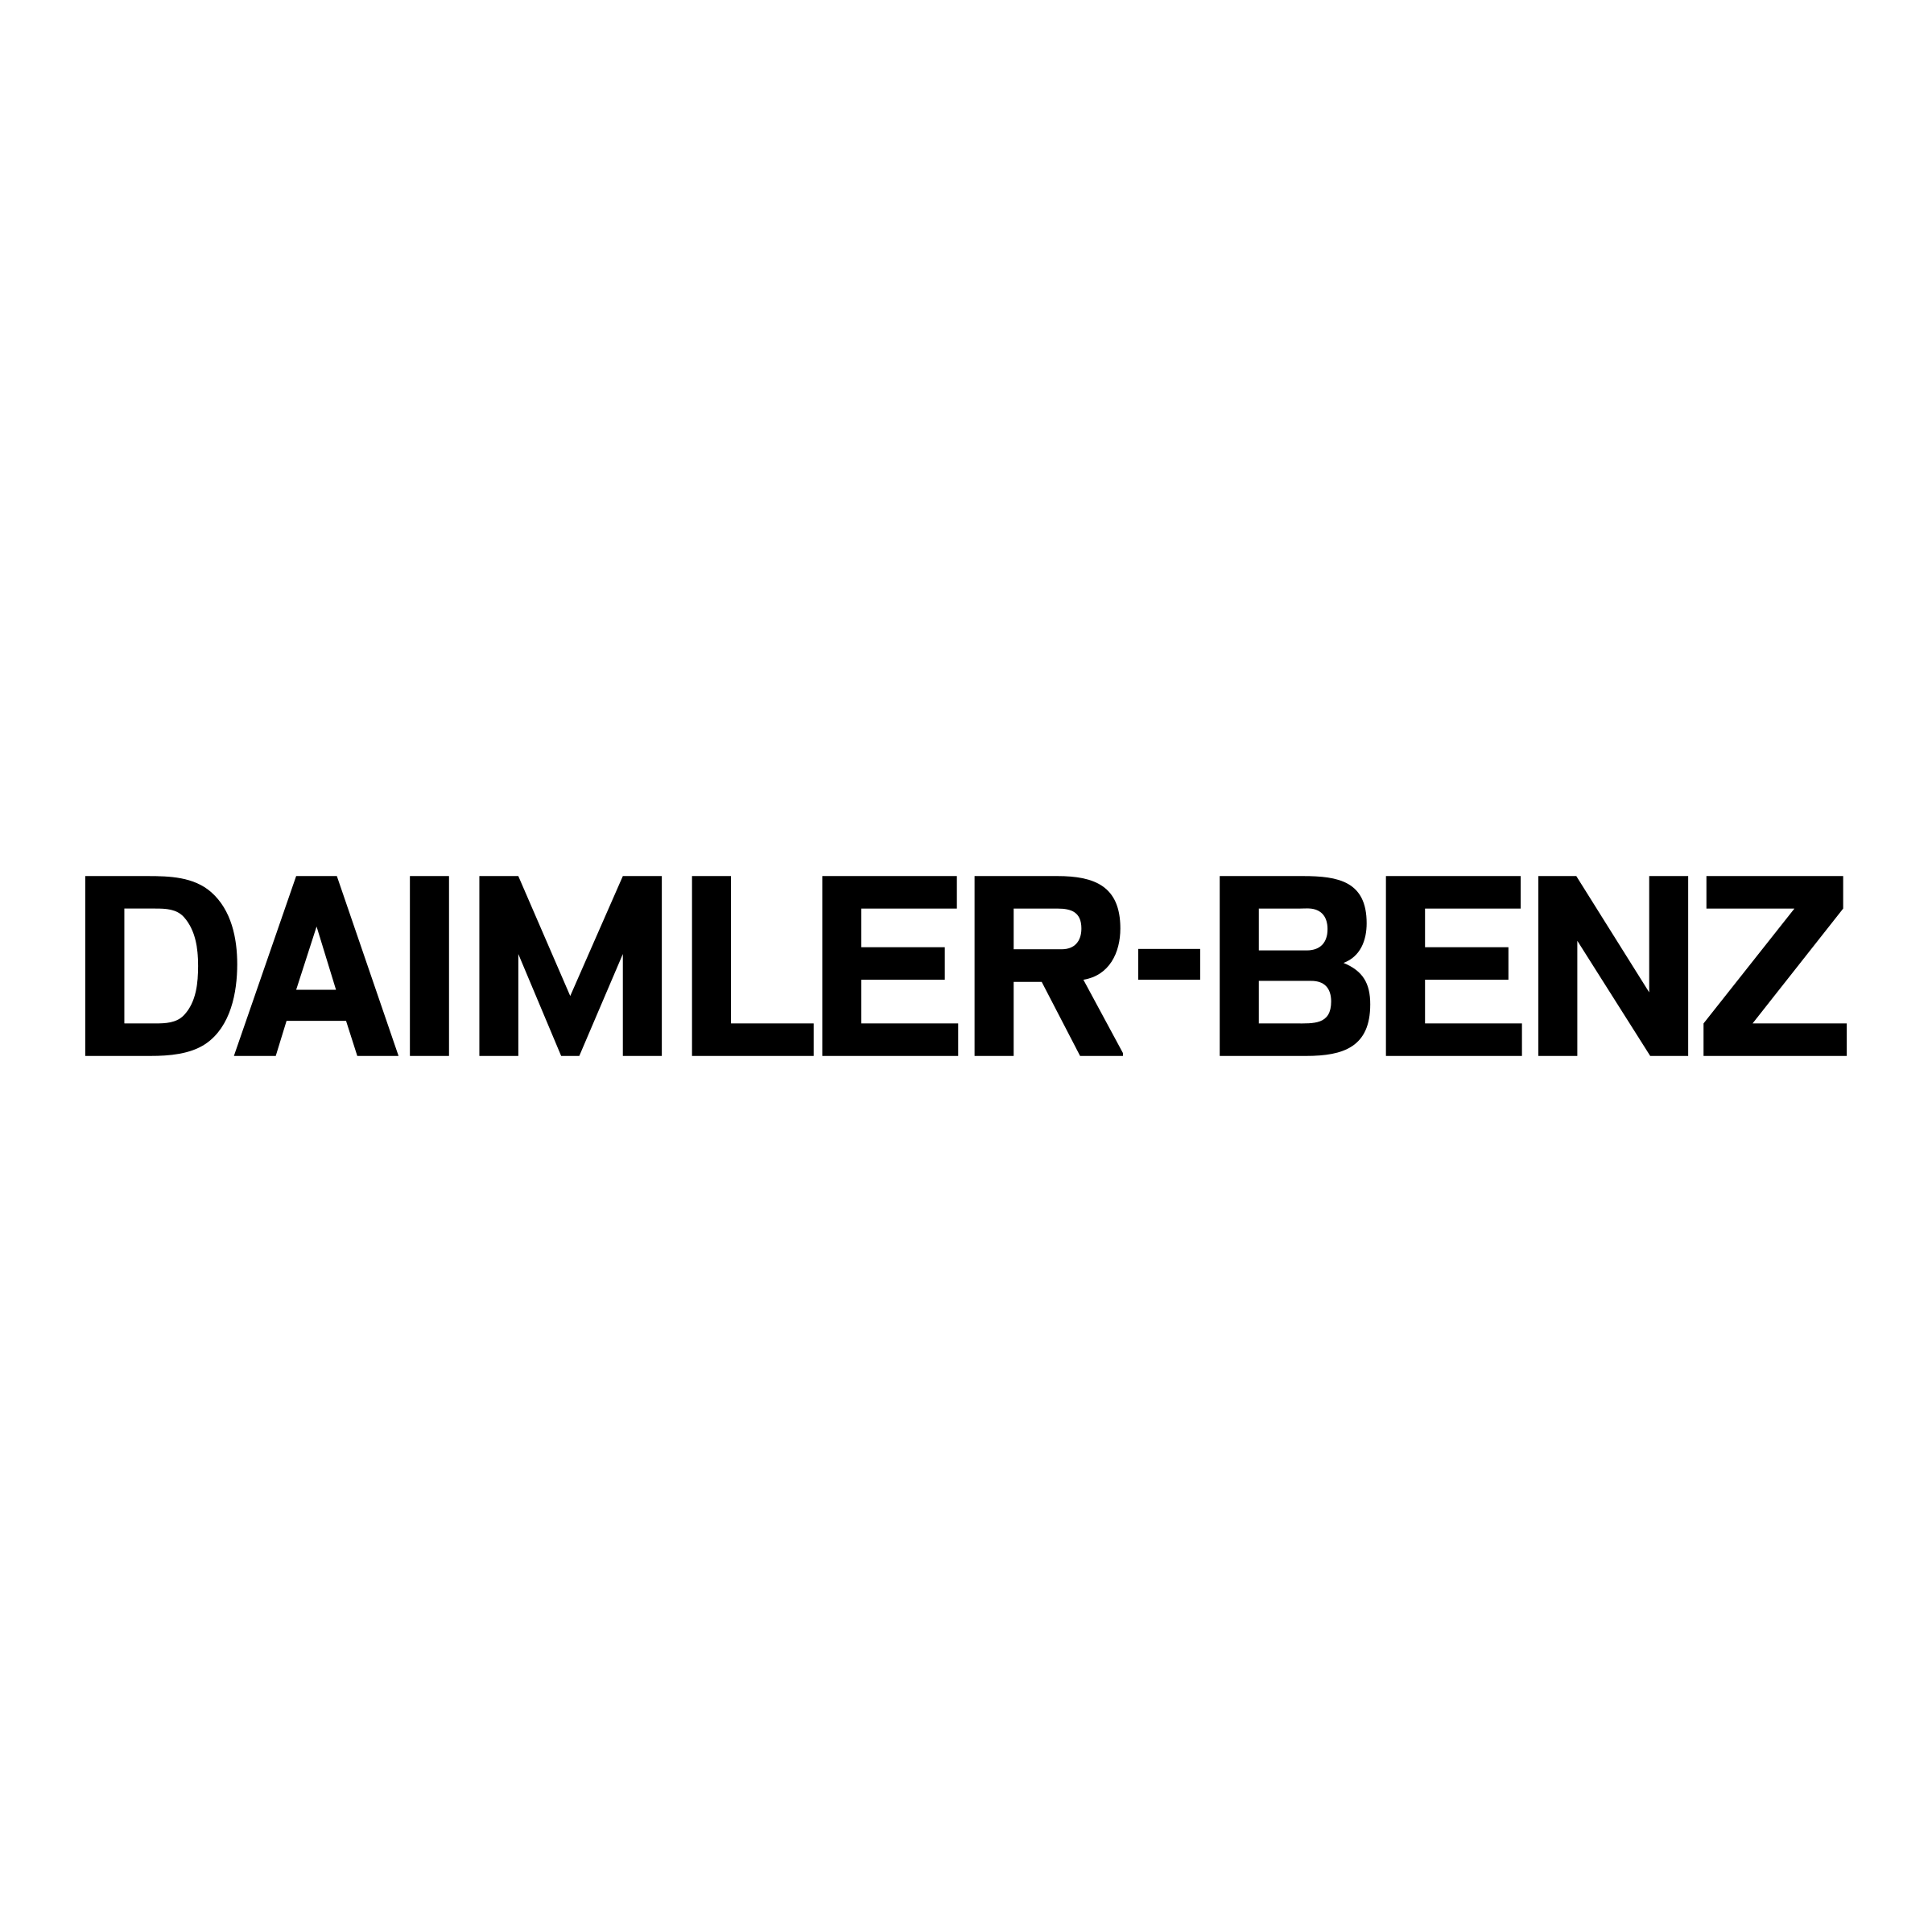 Official Daimler AG Logo - Daimler Benz Logo PNG Transparent & SVG Vector - Freebie Supply